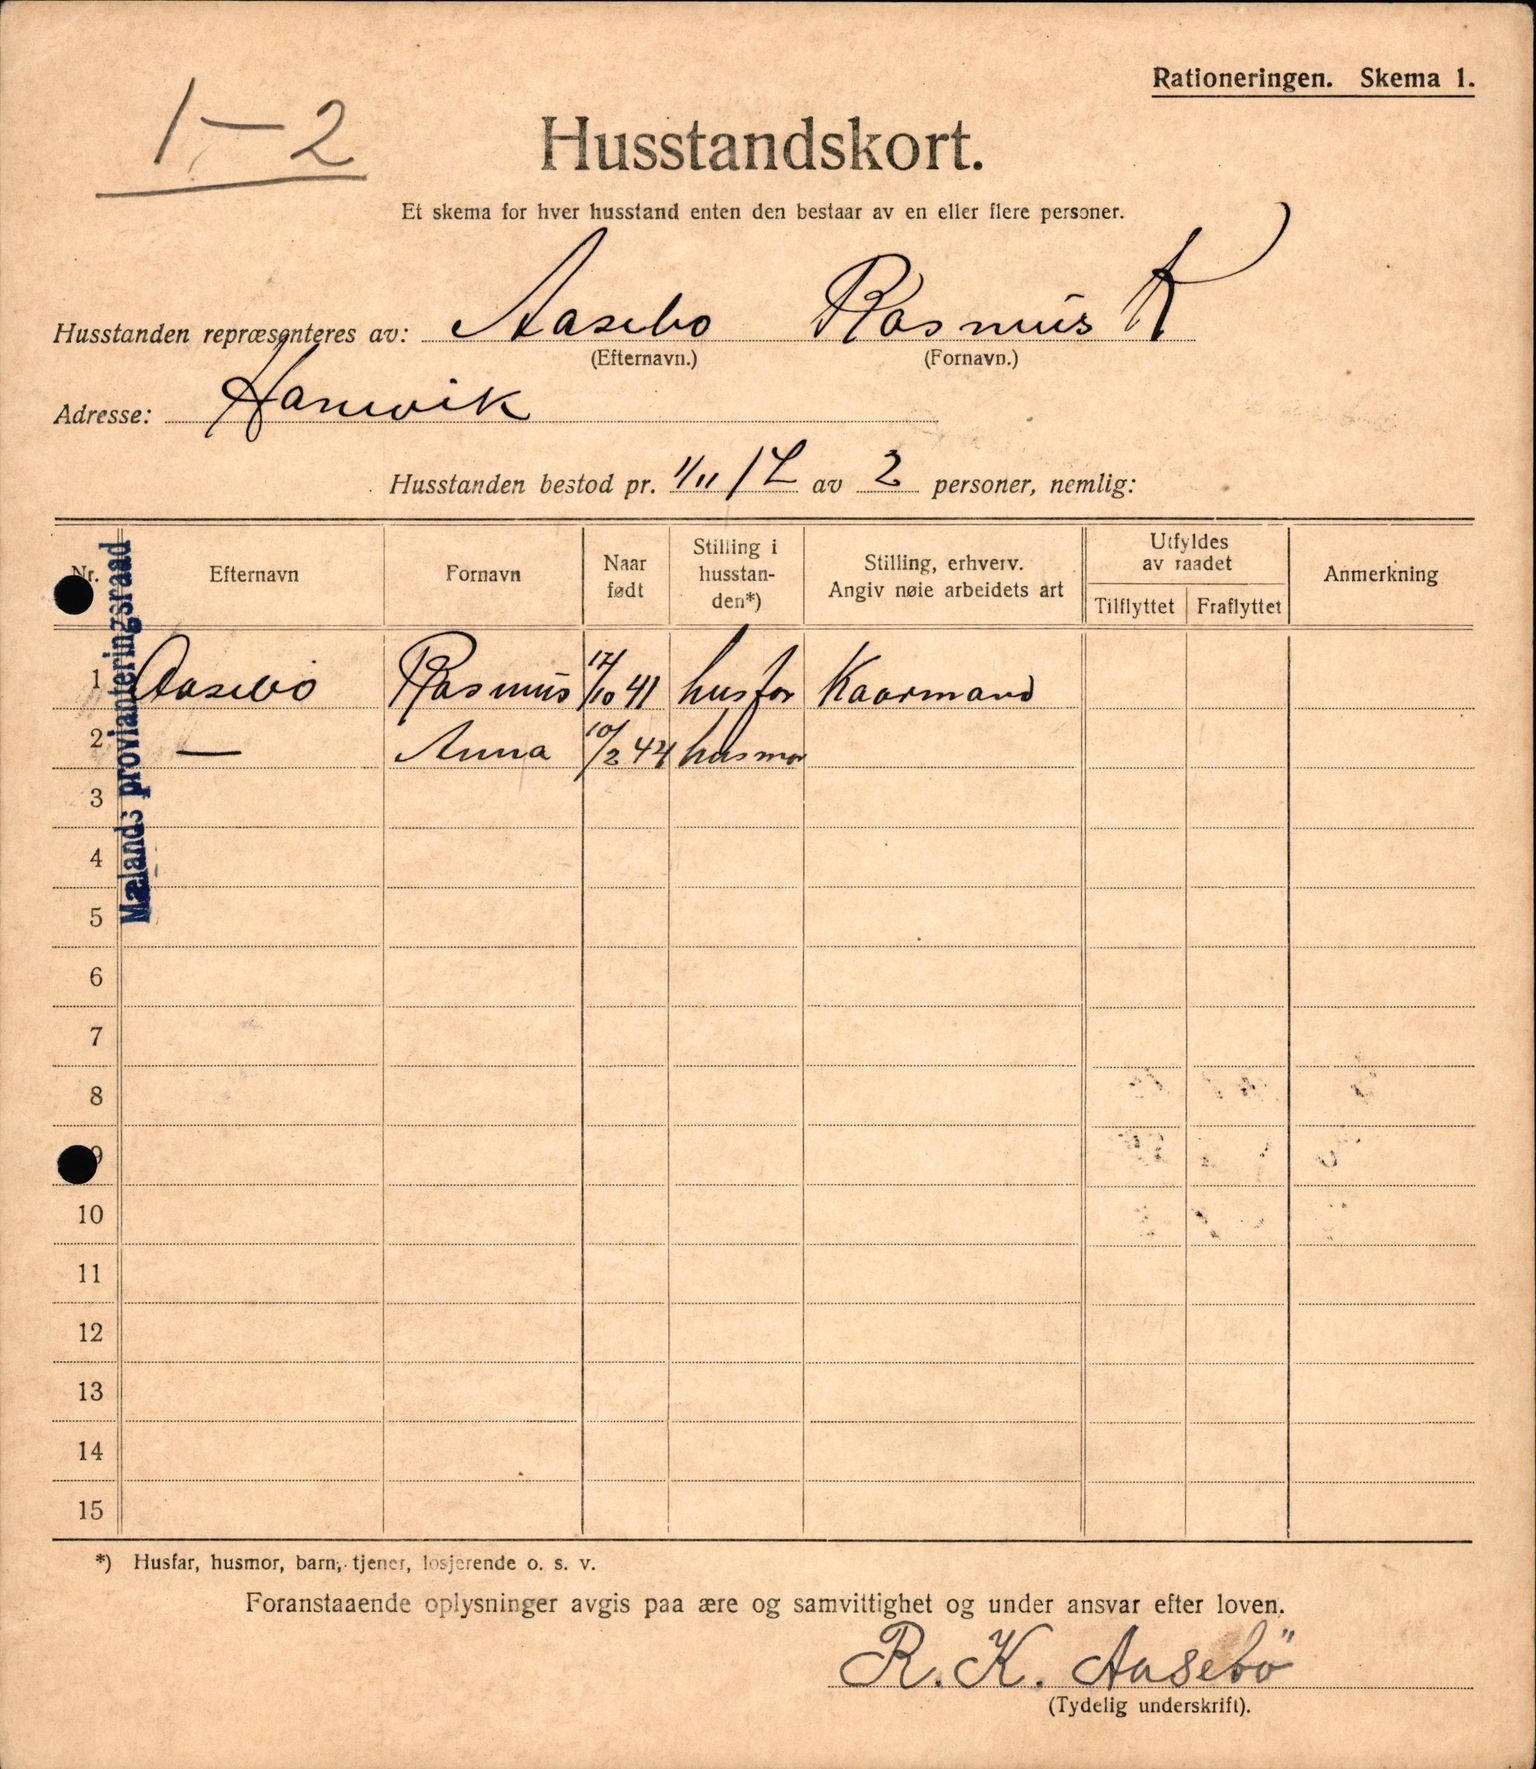 IKAH, Meland kommune, Provianteringsrådet, Husstander per 01.11.1917, 1917-1918, s. 47